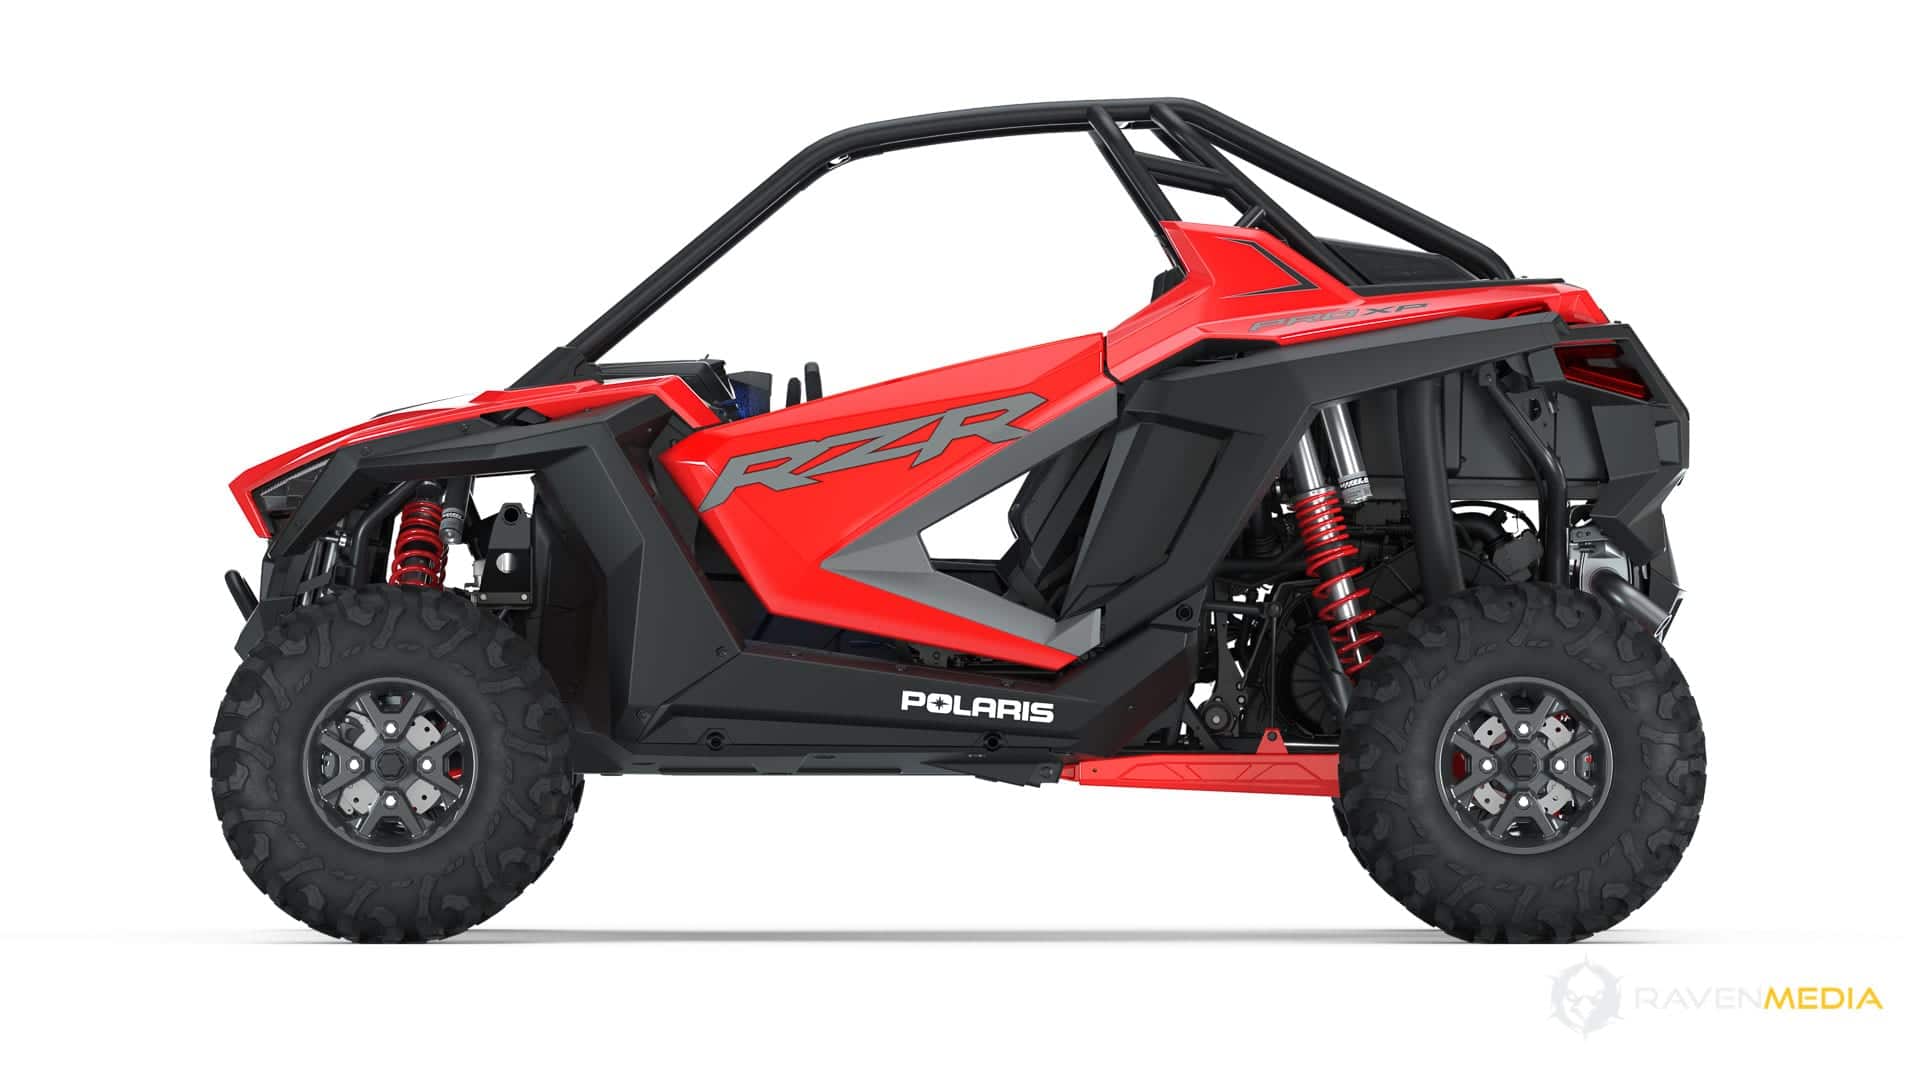 2020 Polaris RZR Pro XP